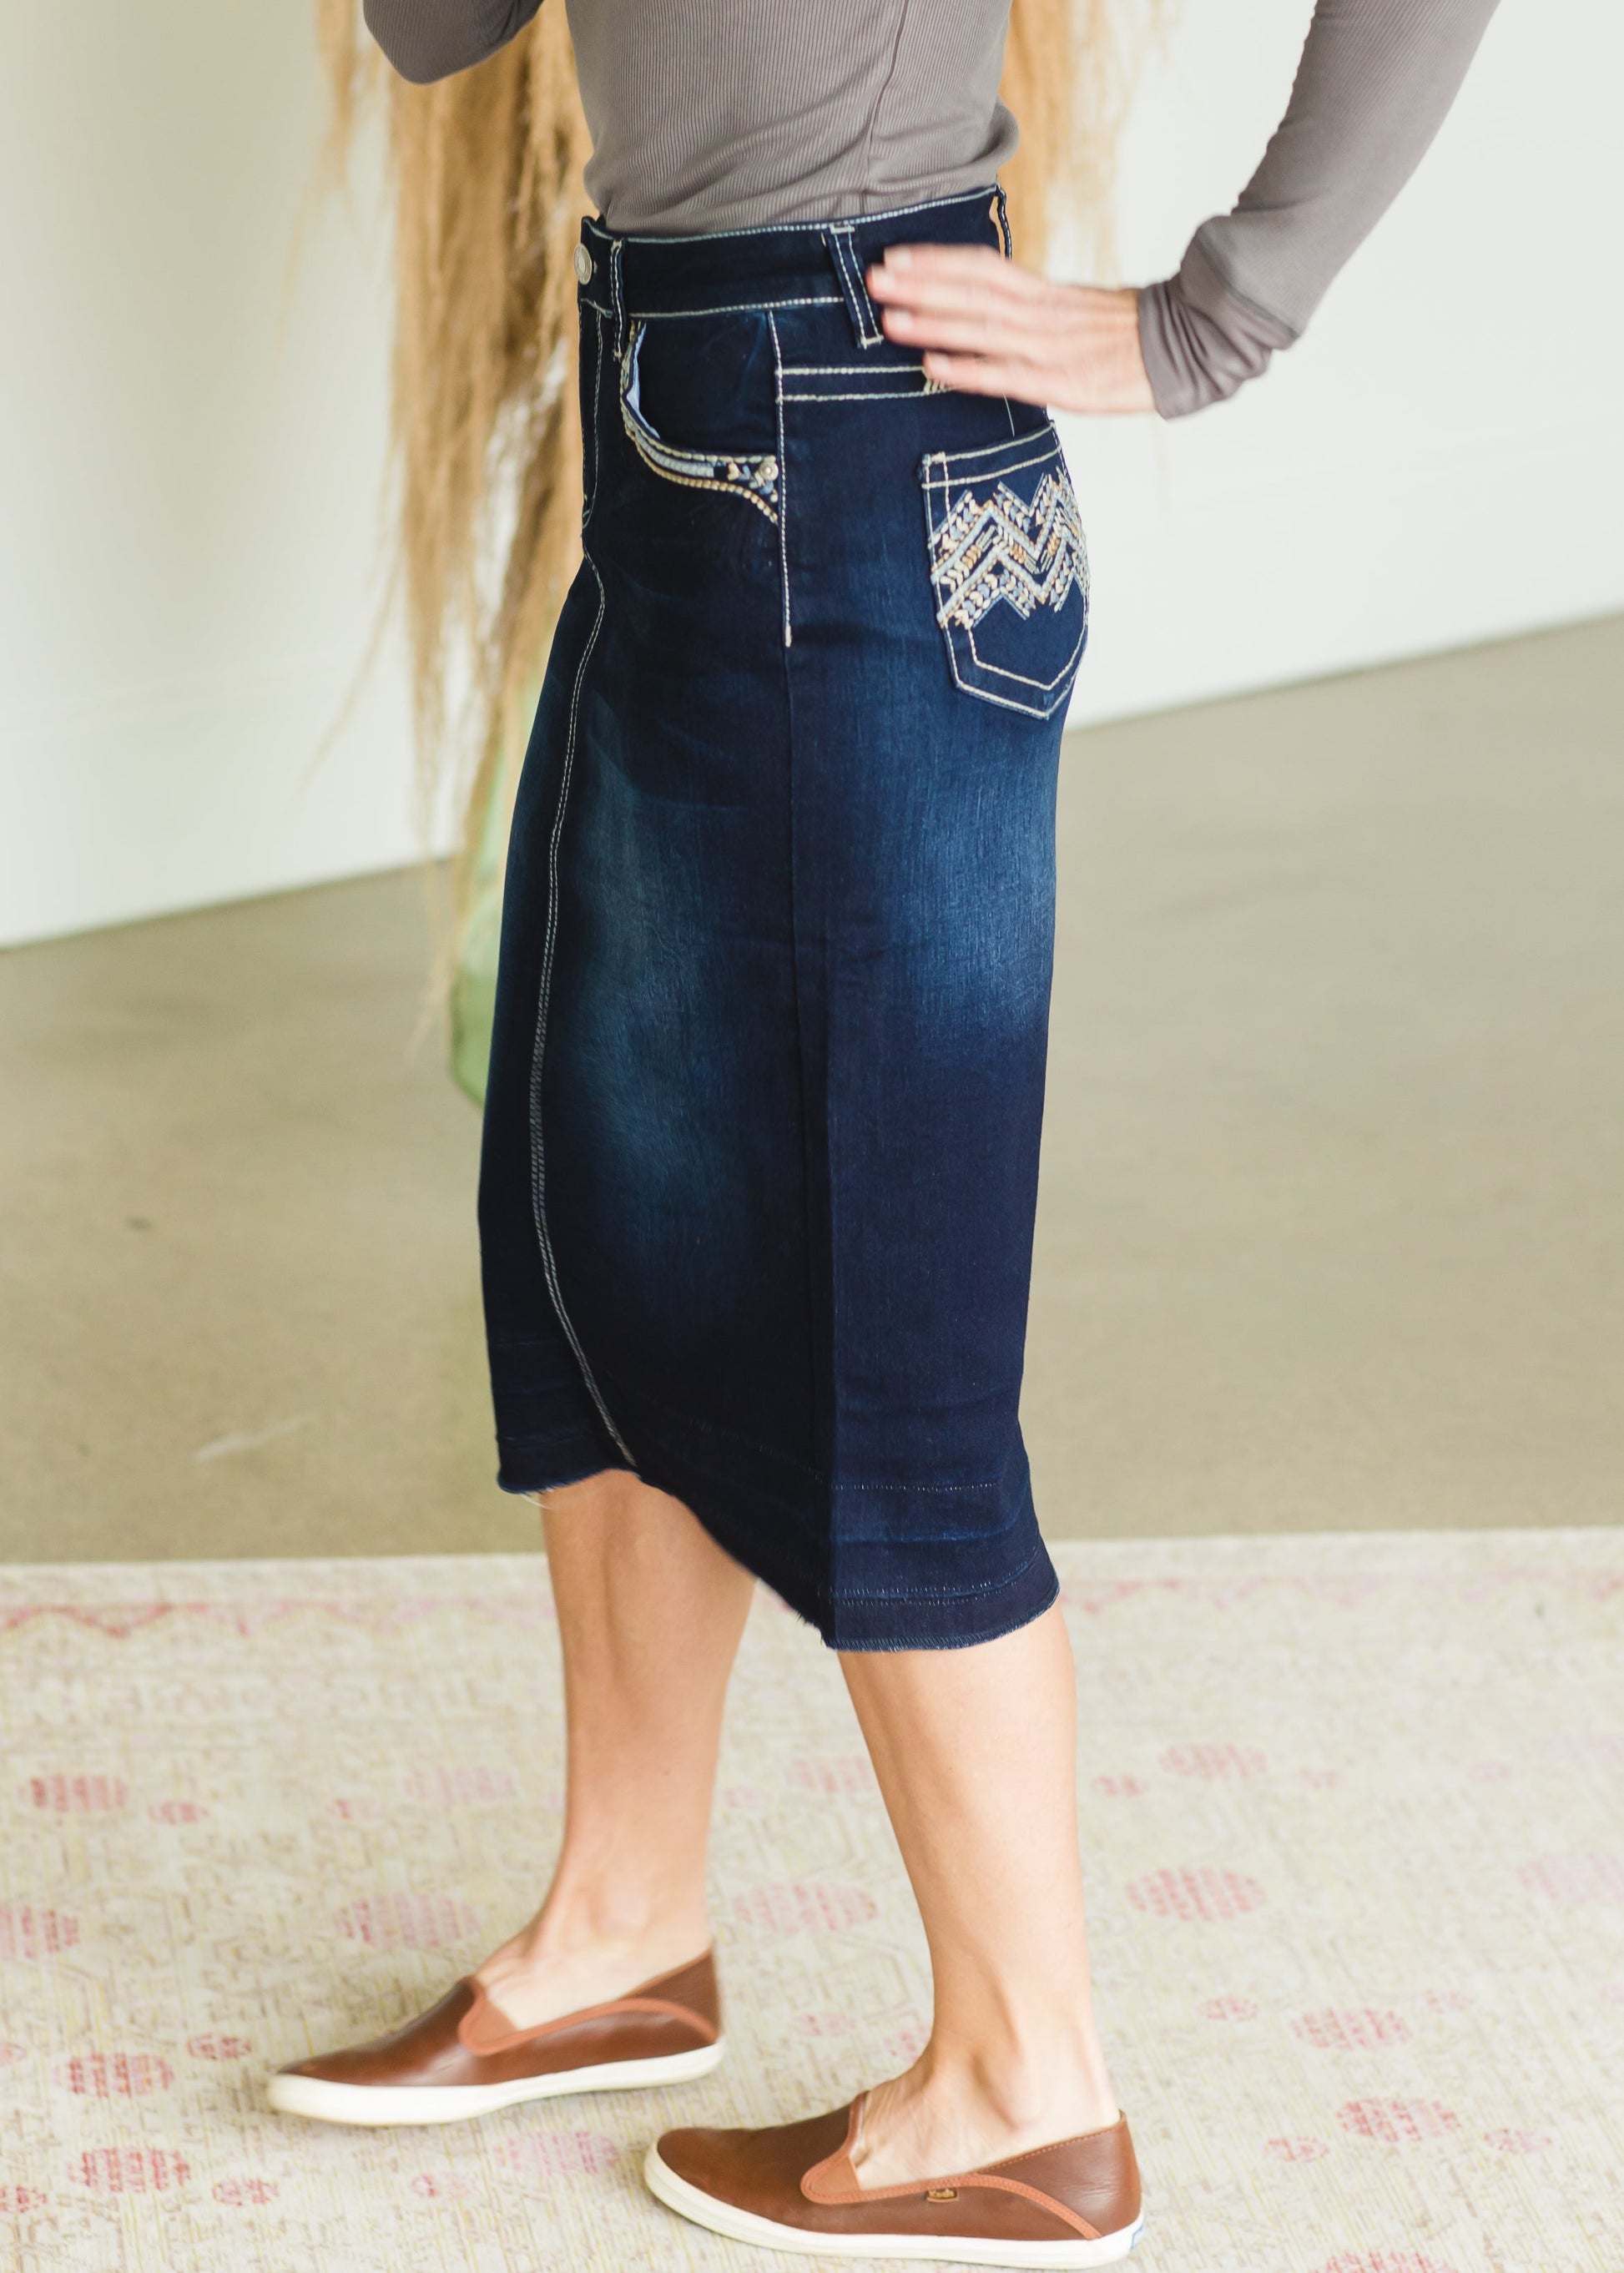 Contrast Stitch Blue Jean Skirt - FINAL SALE Skirts